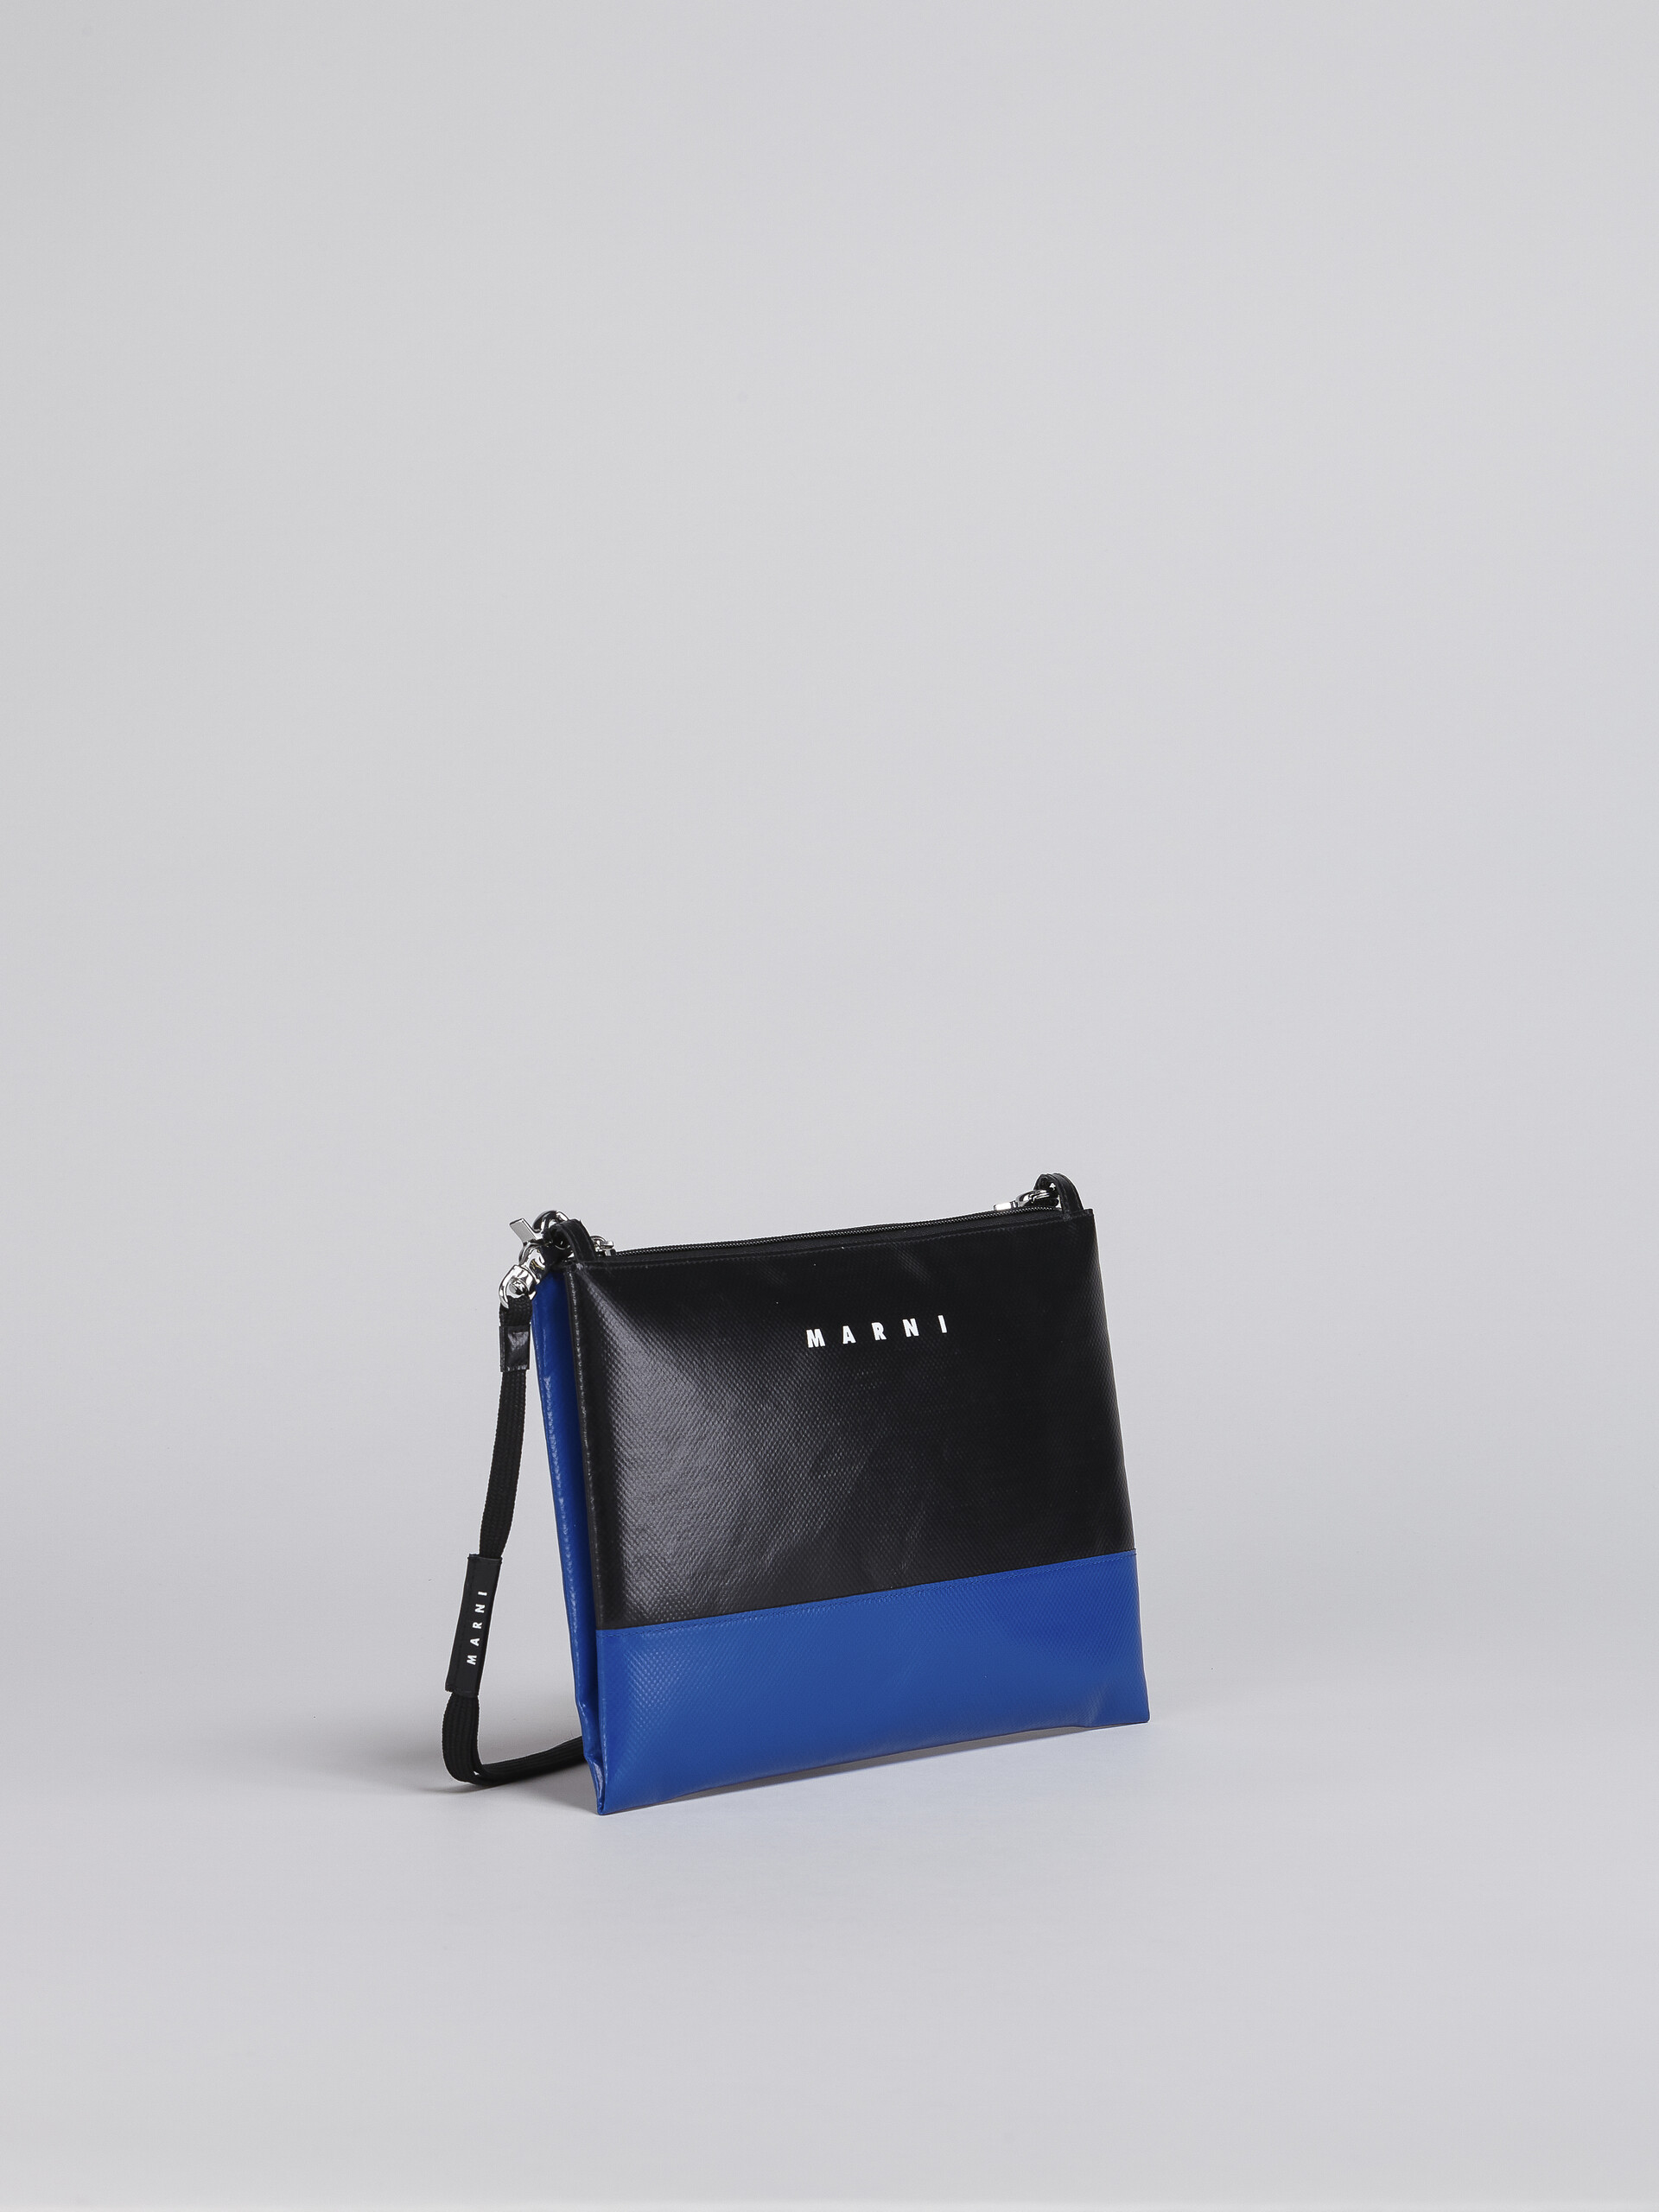 PVC TRIBECA crossbody bag - Shoulder Bag - Image 6